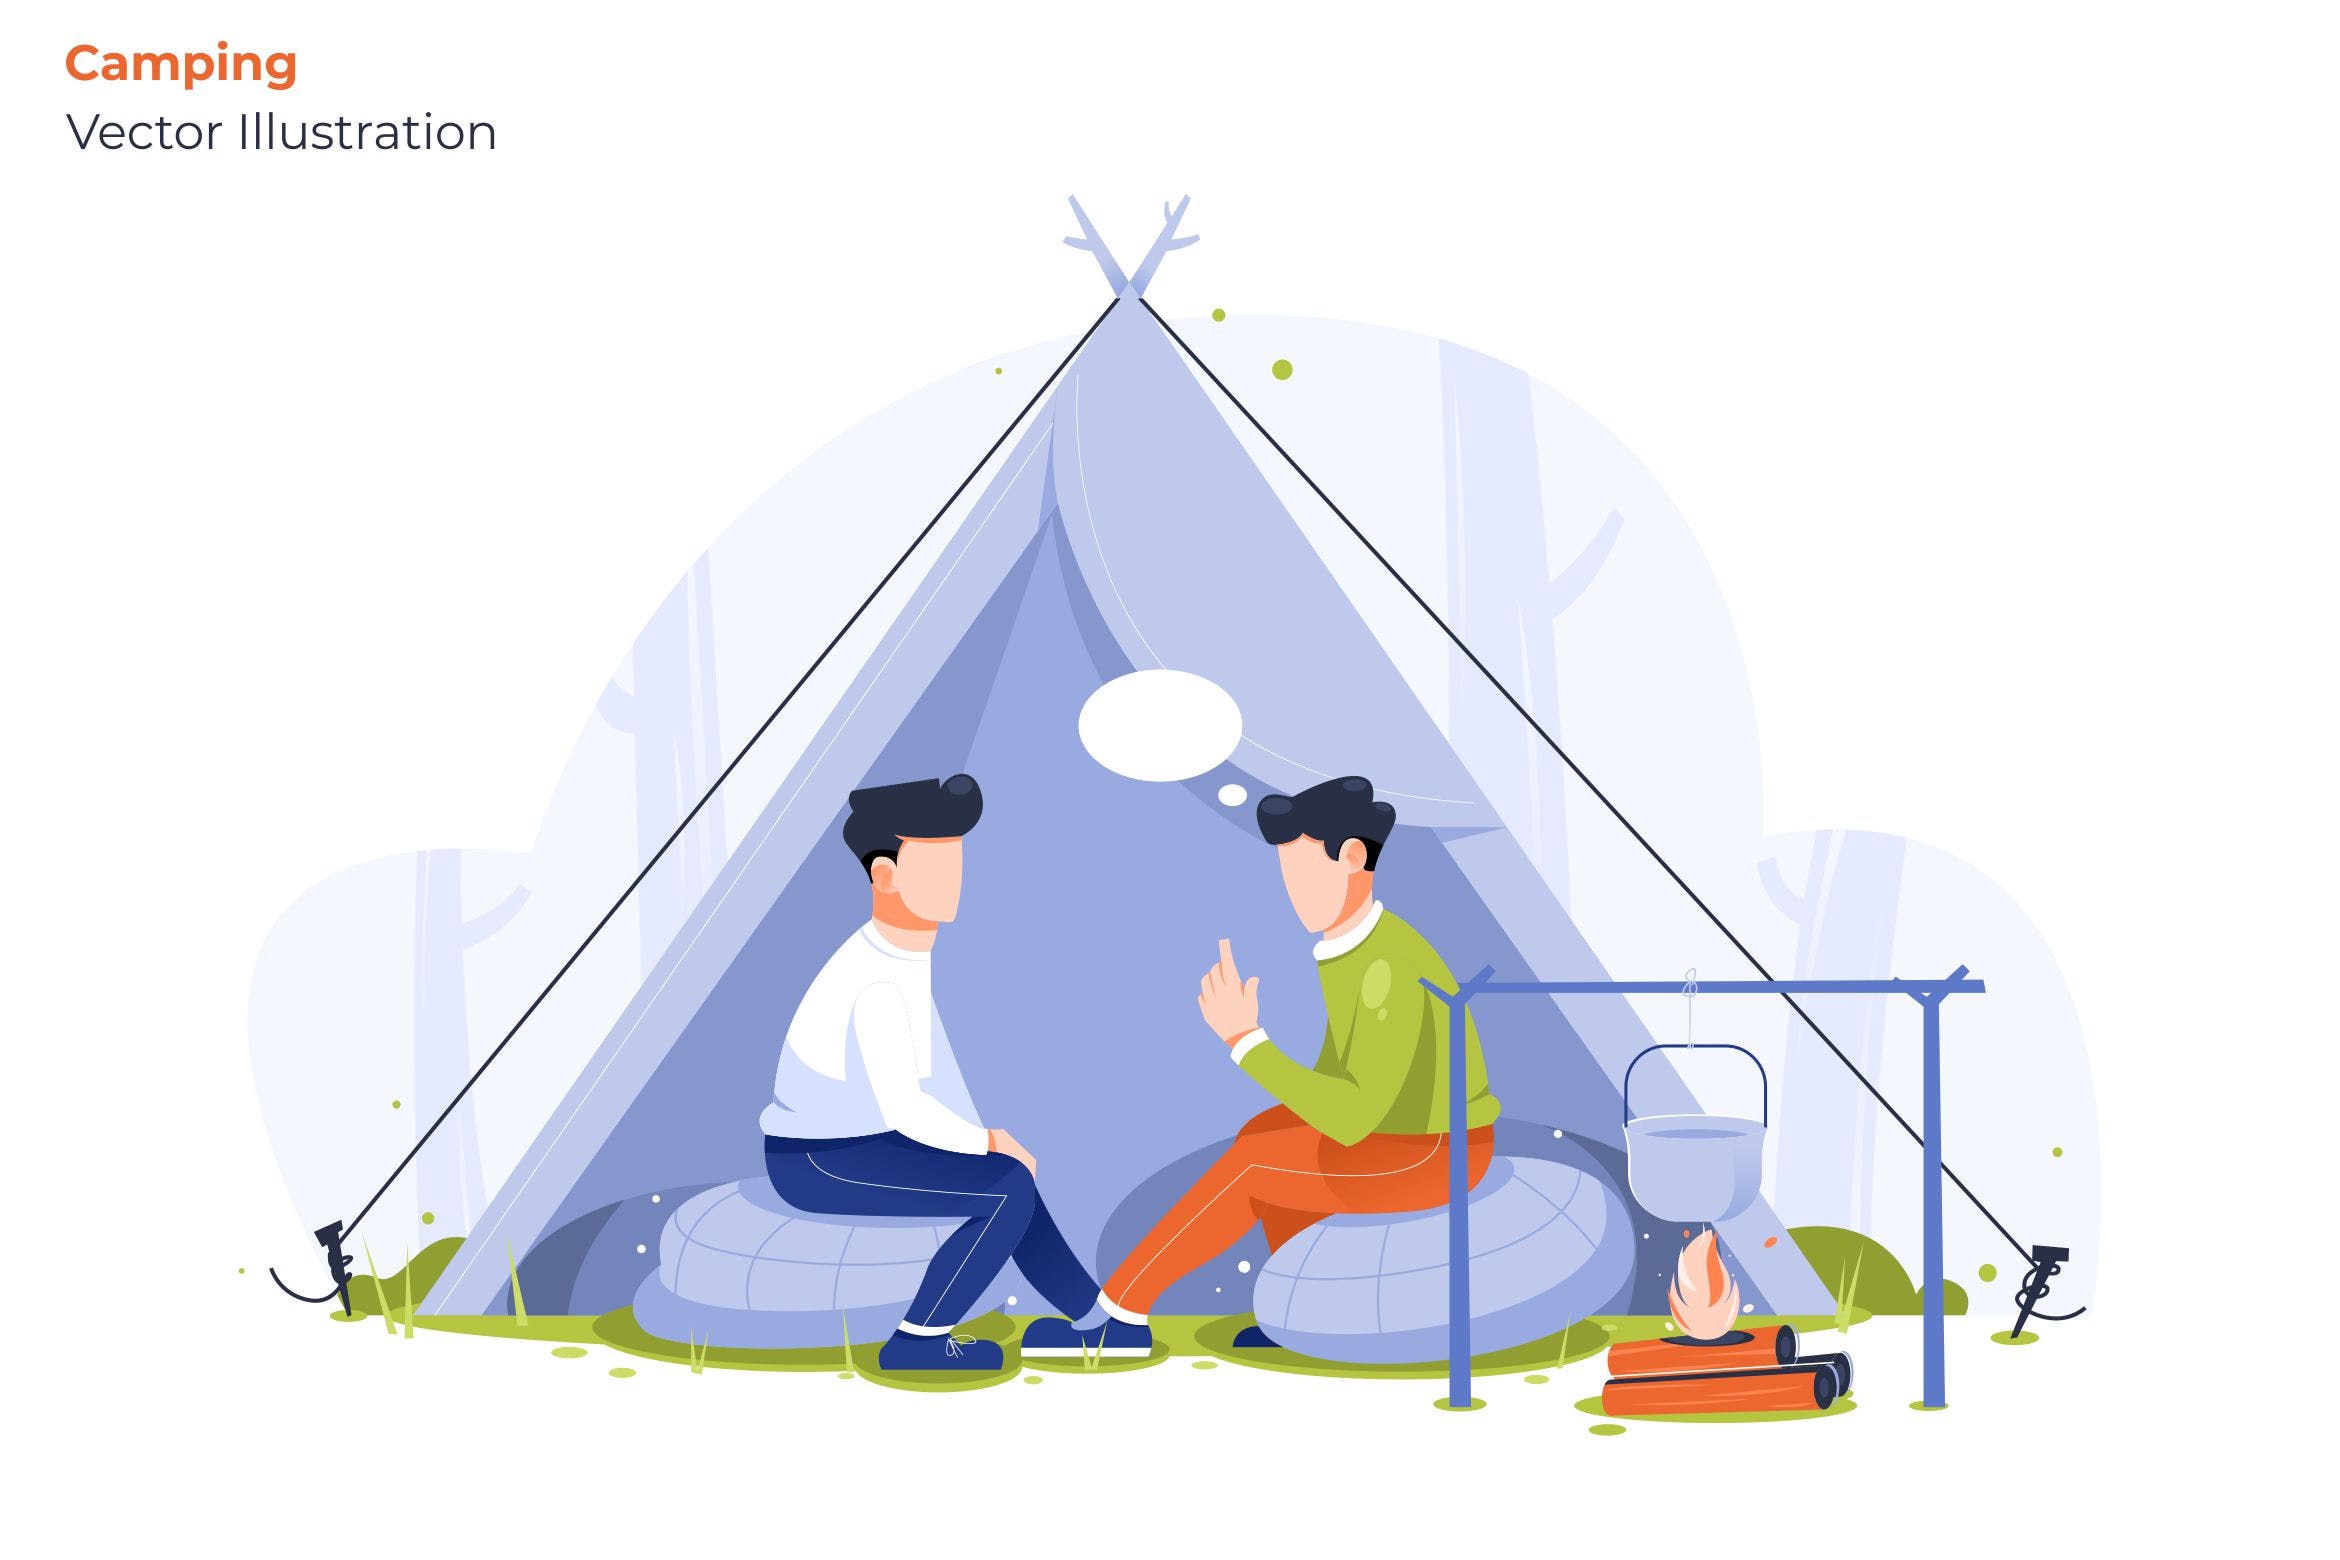 野外露营场景矢量插画素材库精选素材 Camping – Vector Illustration插图